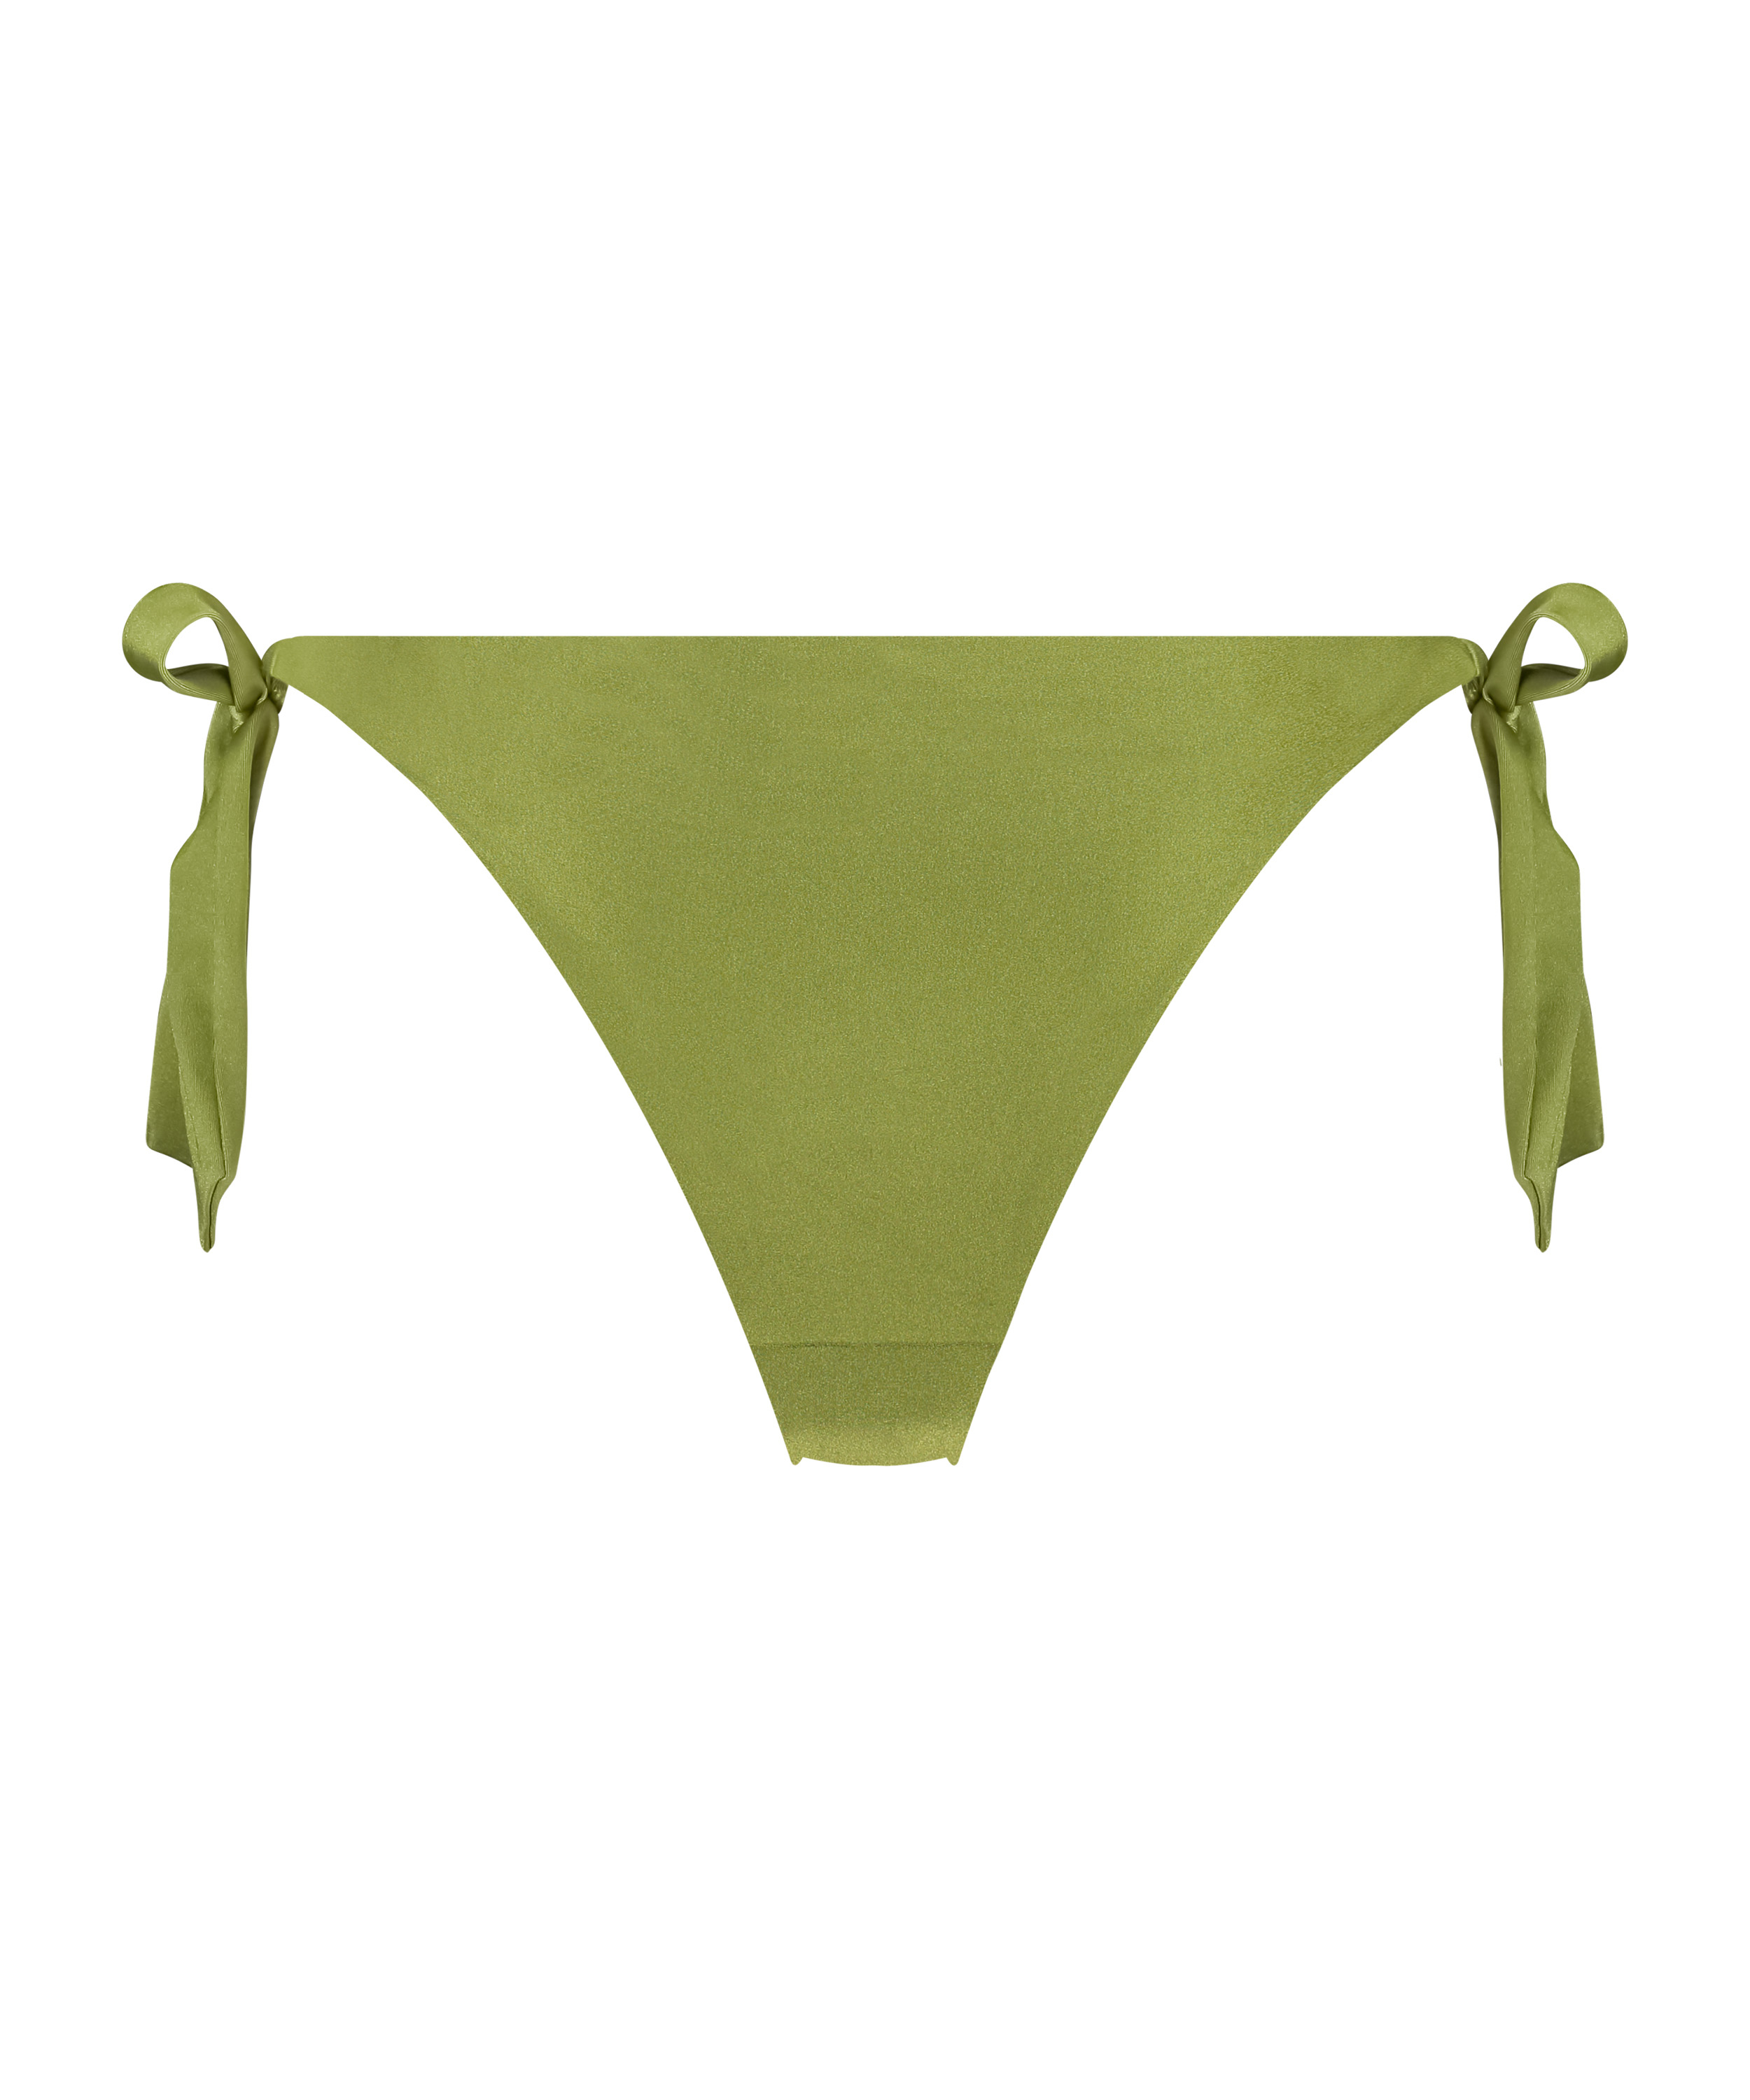 Holbox Cheeky Tanga Bikini Bottoms, Green, main